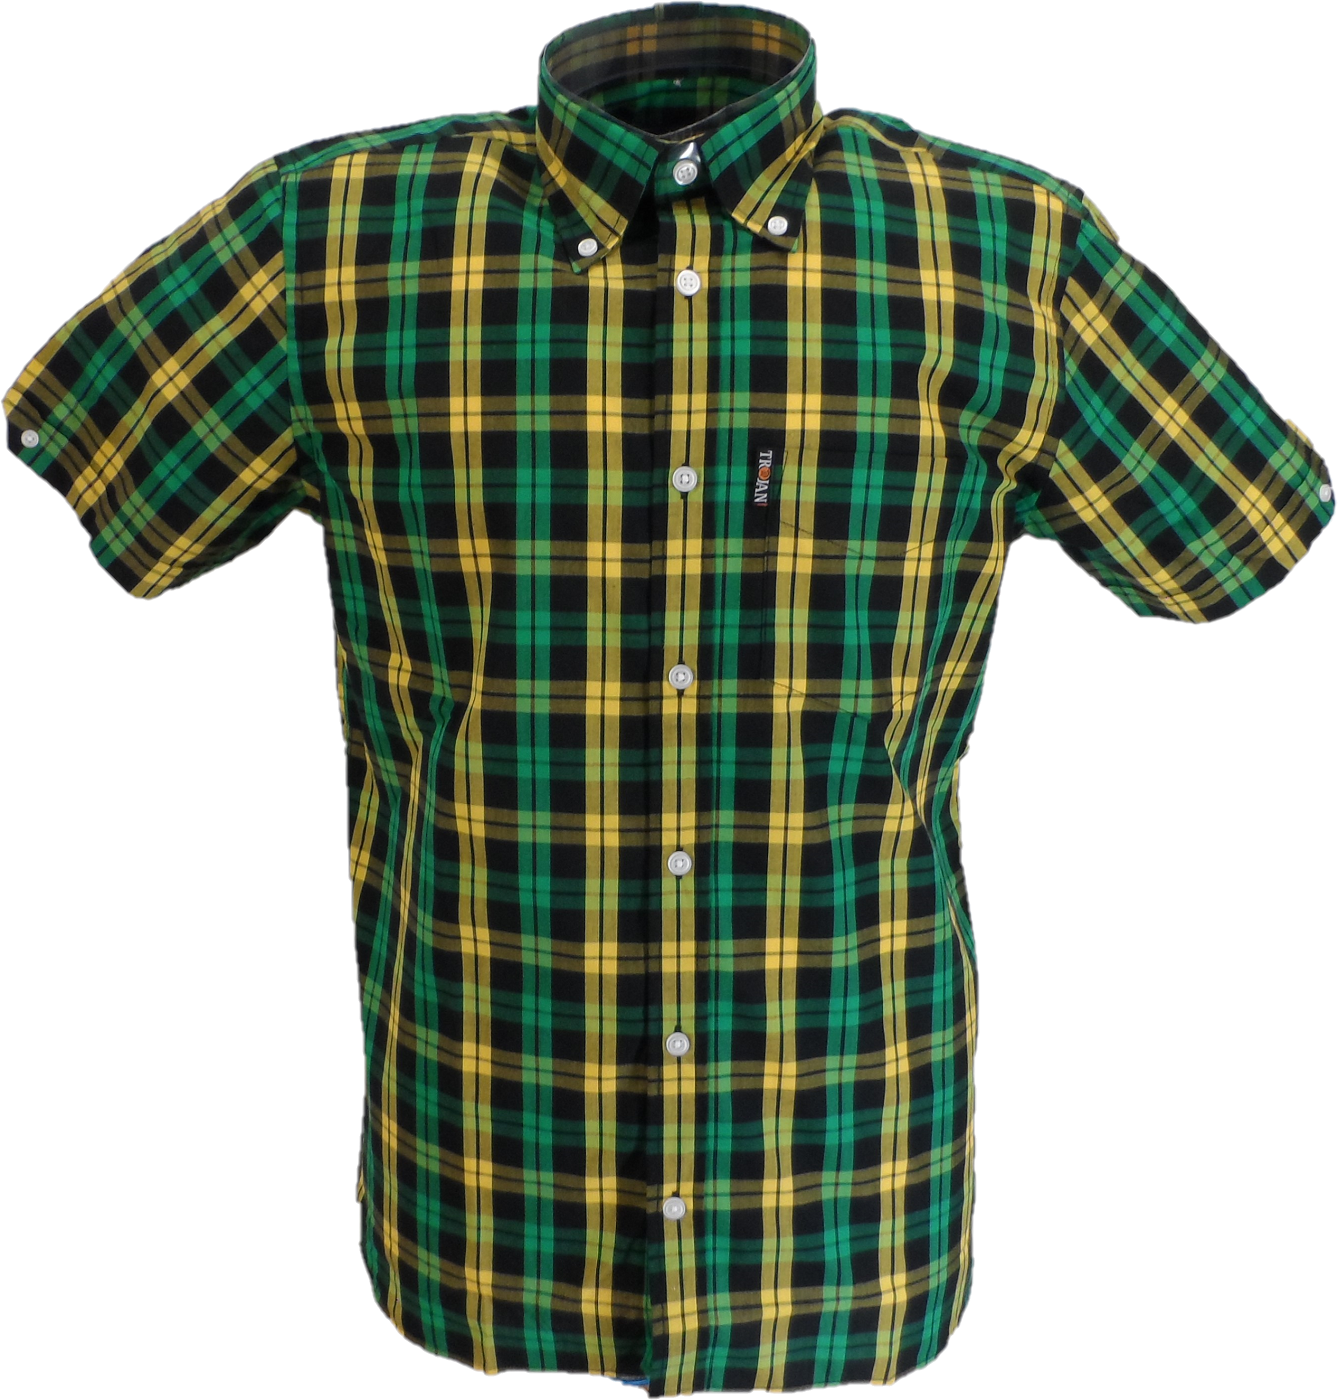 Trojanメンズ ブラック/グリーン/ゴールド チェック半袖シャツとポケット チーフ